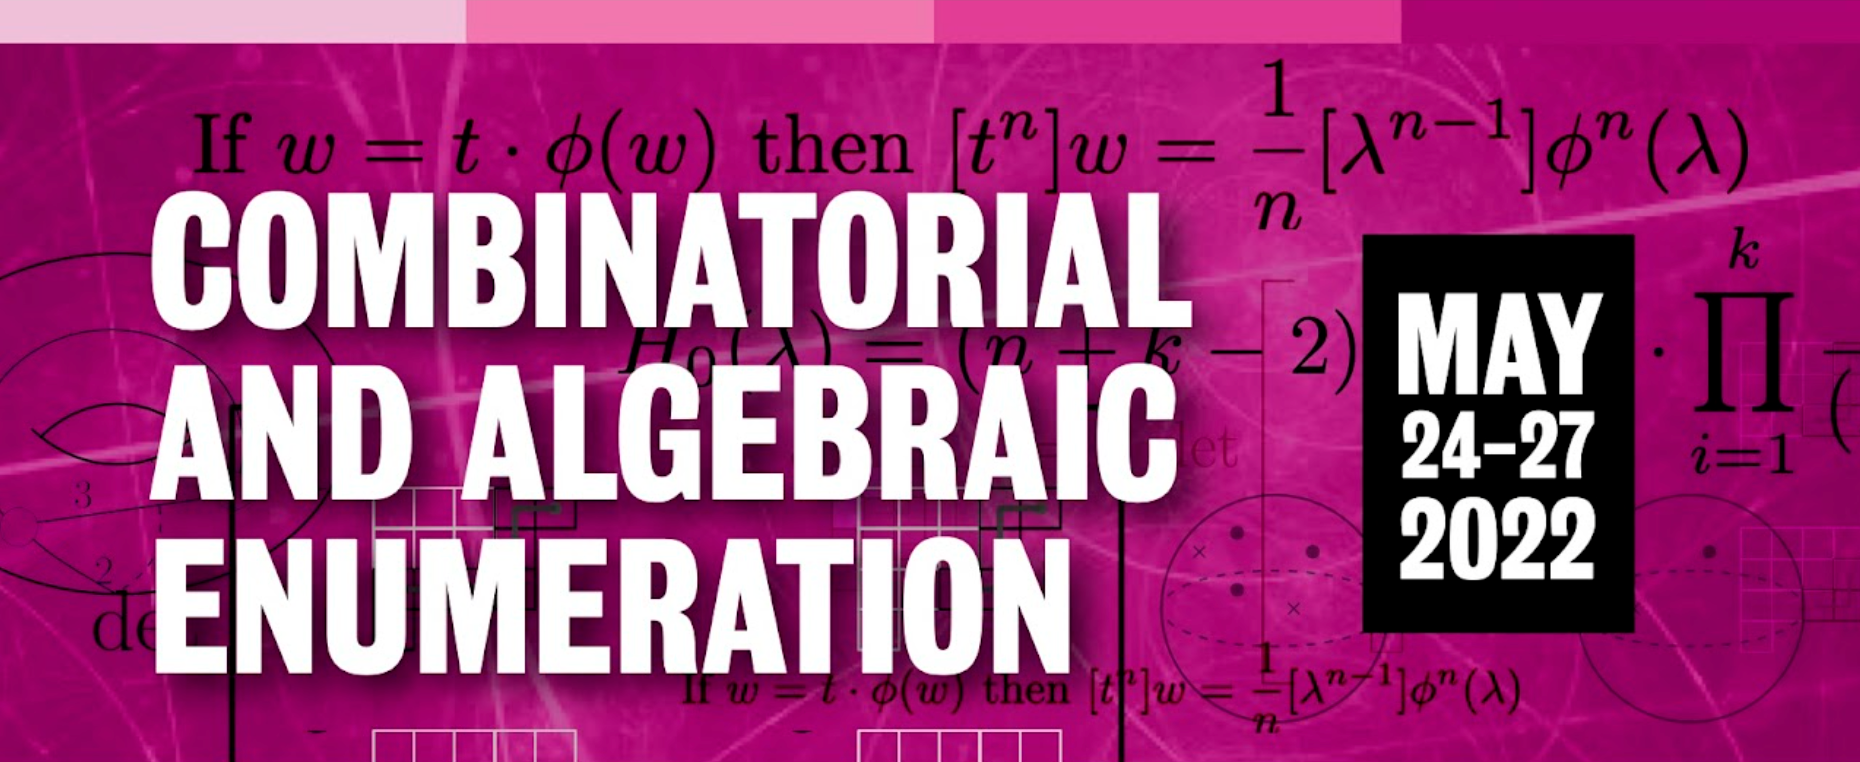 Combinatorial and Algebraic Enumeration